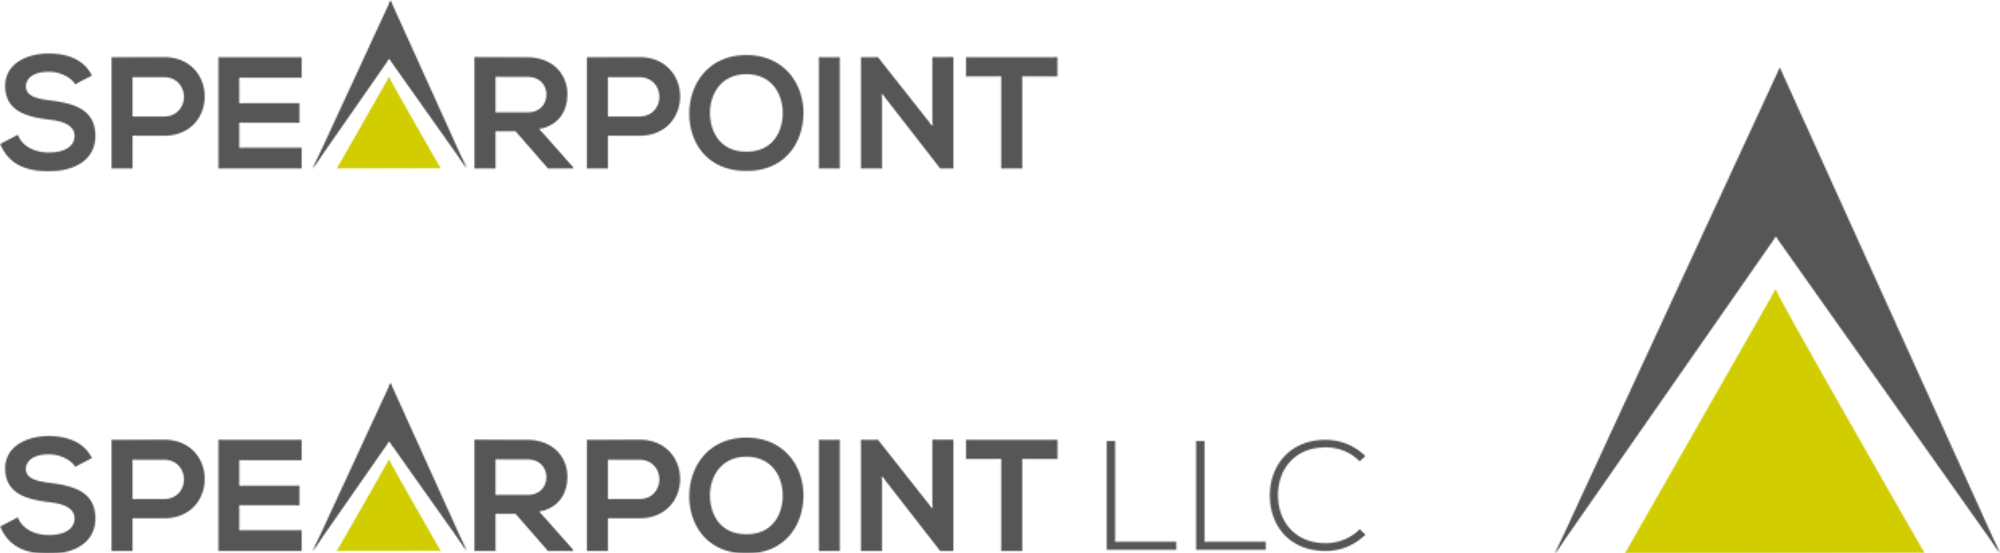 Spearpoint logos